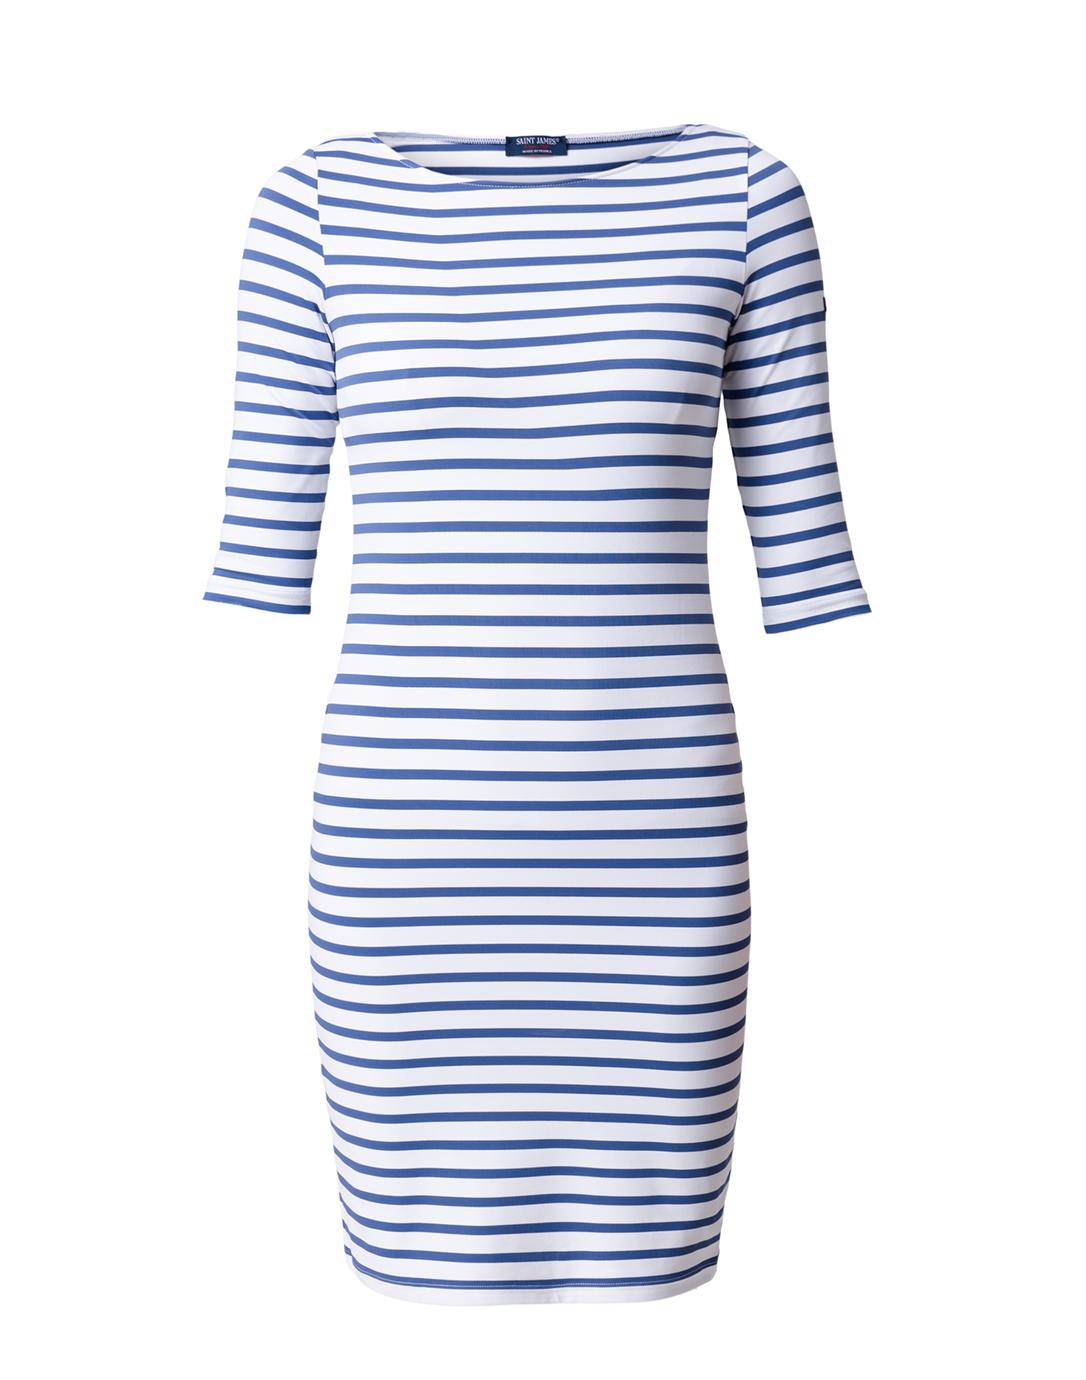 white blue striped dress